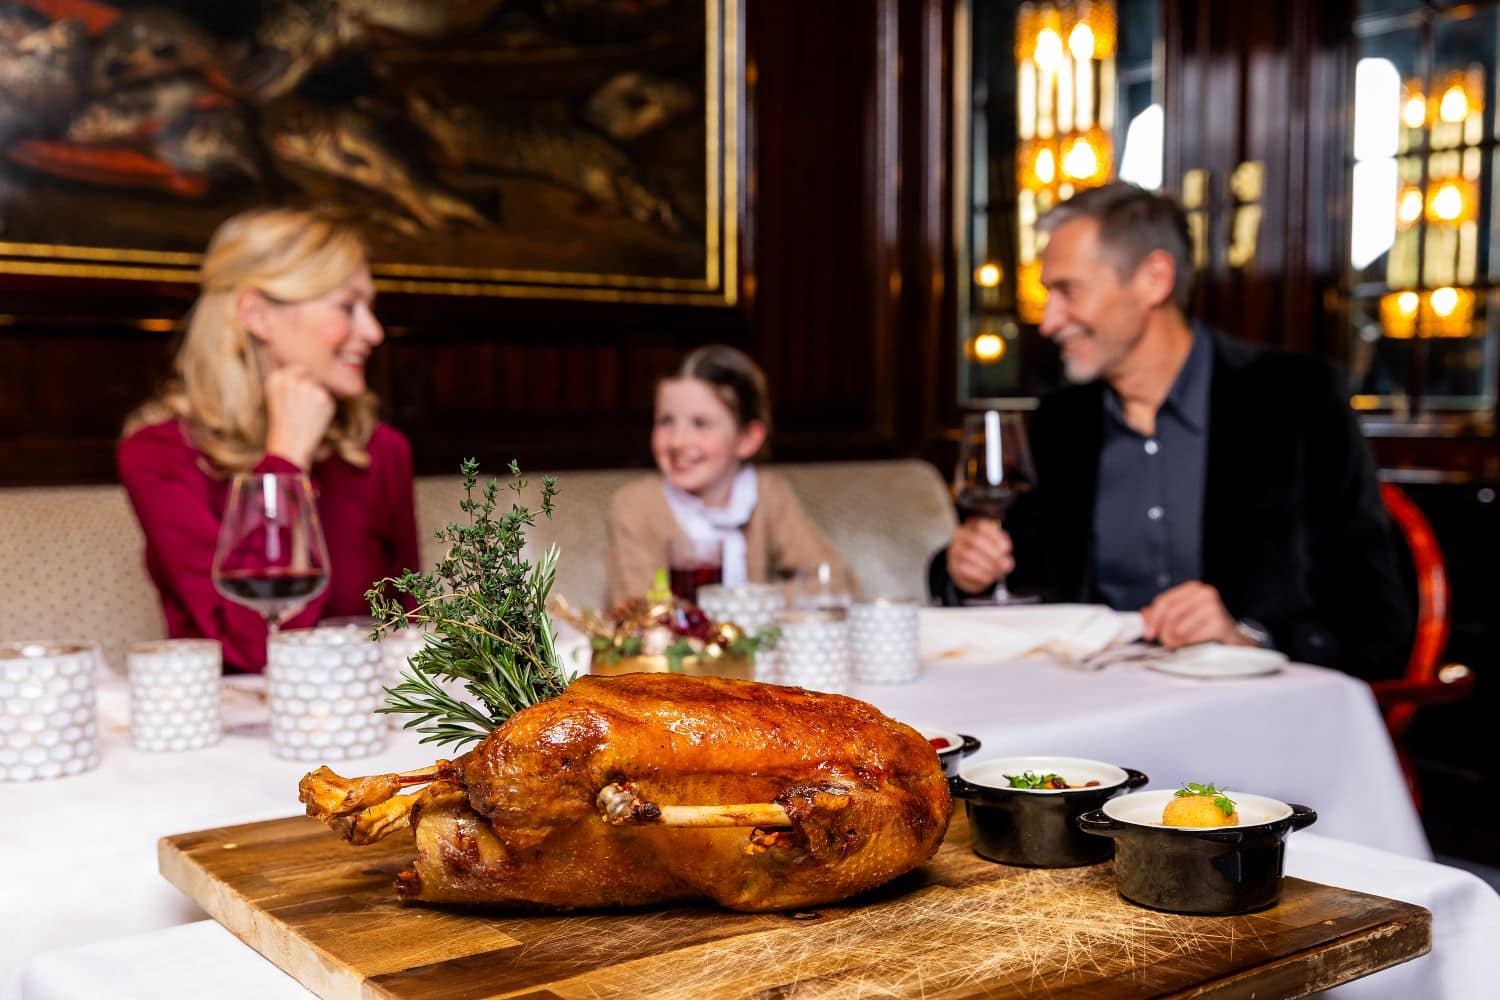 Family enjoying goose dinner at excelsior hotel ernst